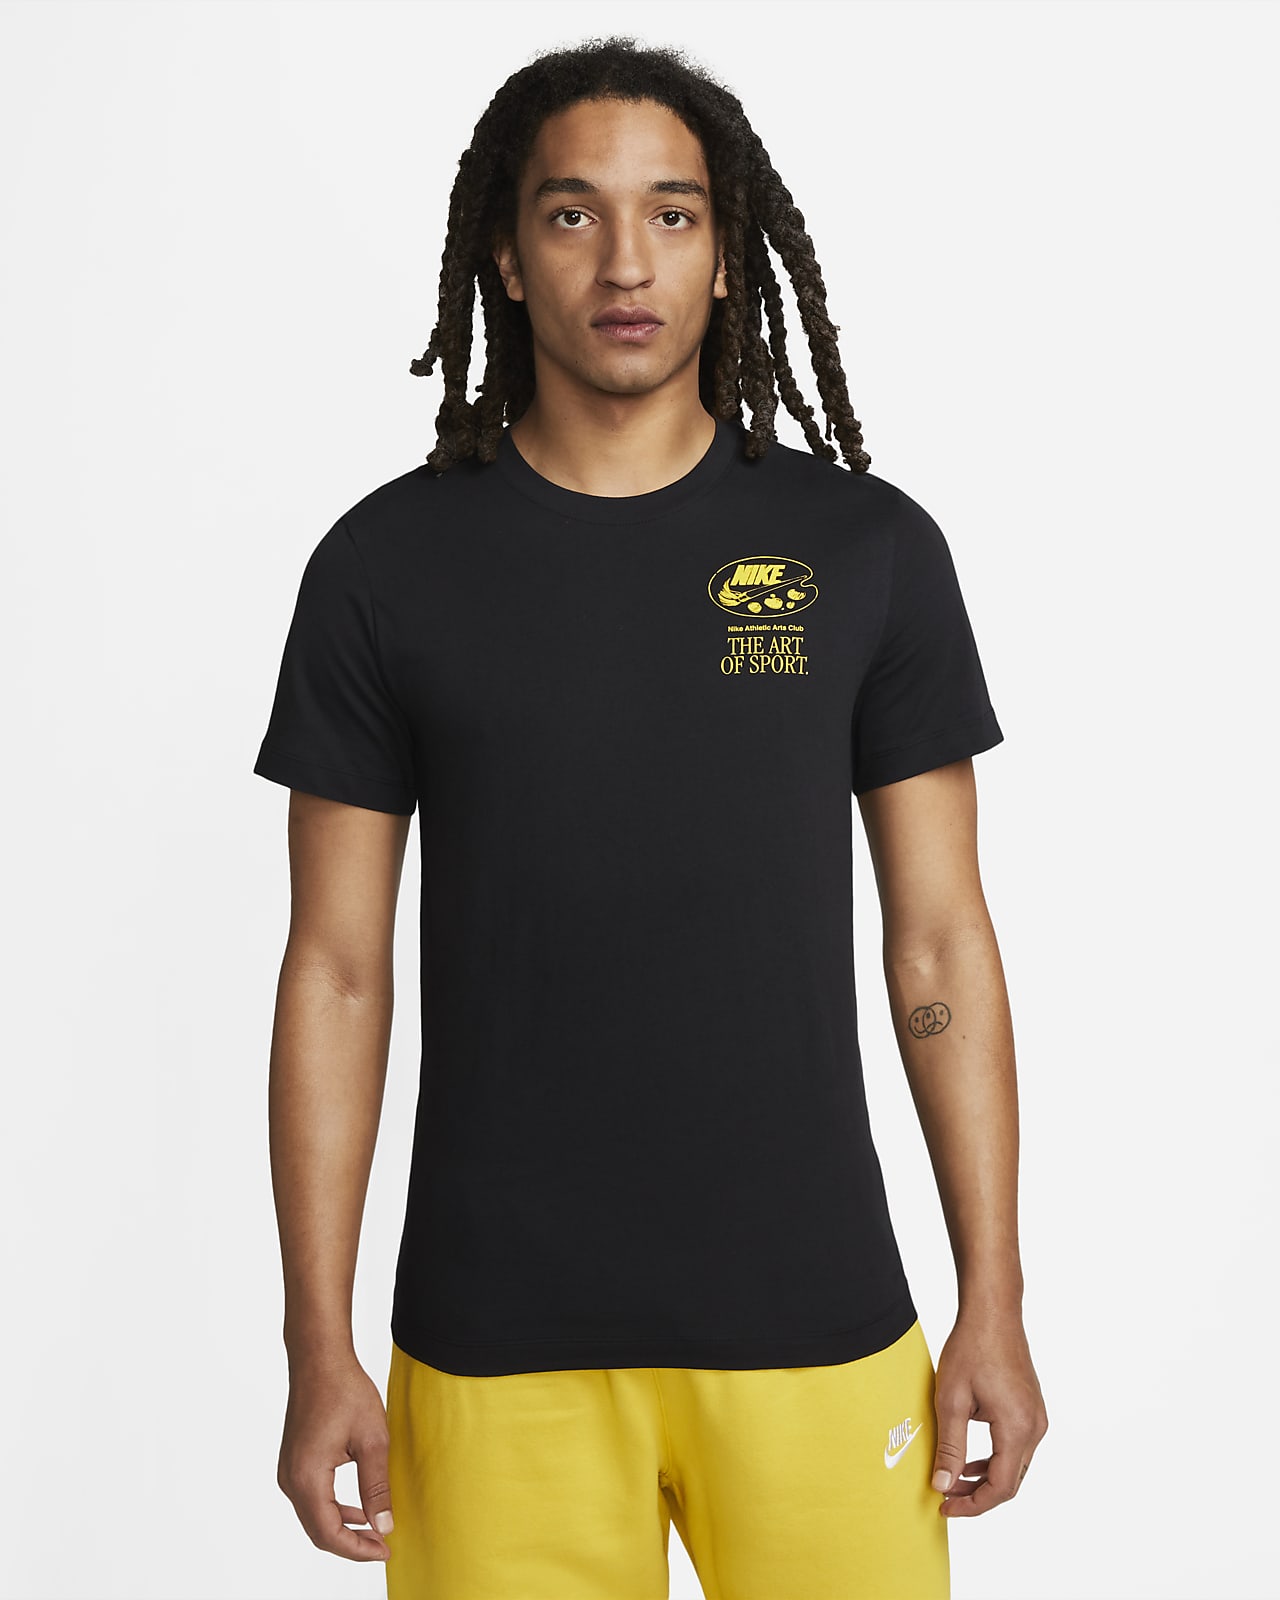 Men's Sale Tops & T-Shirts. Nike PH